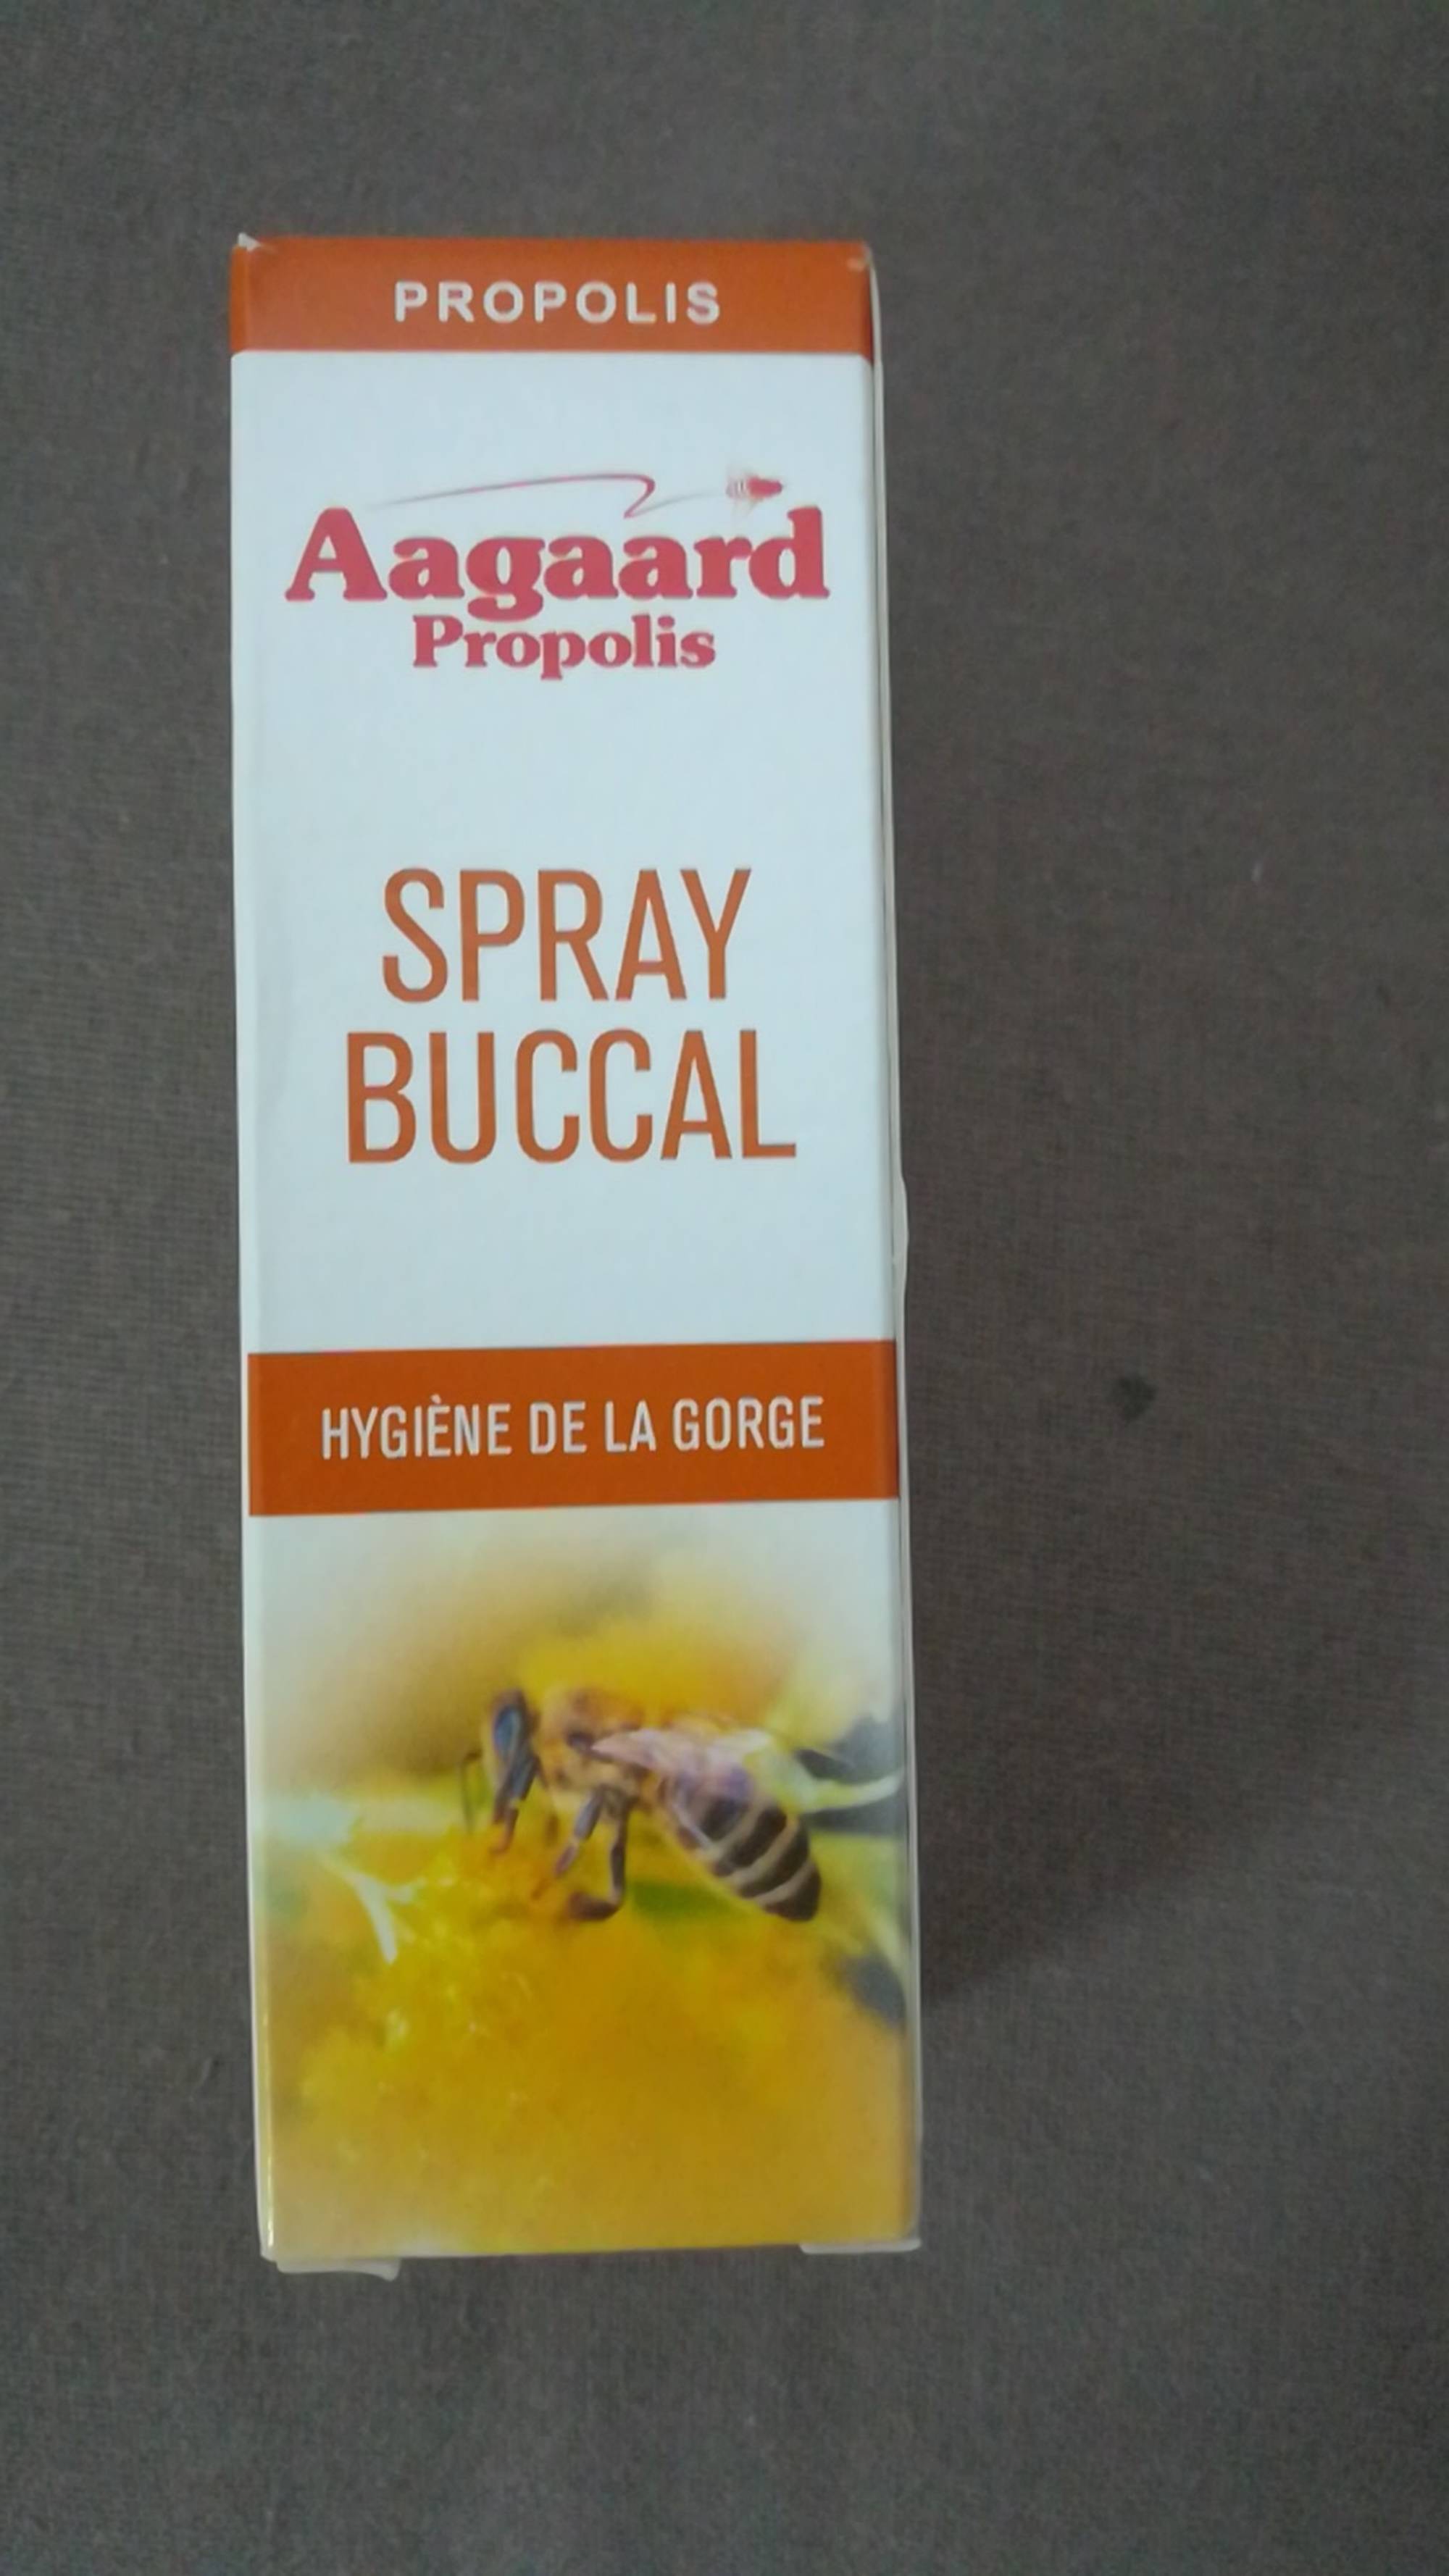 AAGAARD PROPOLIS - Spray buccal - Hygiène de la gorge